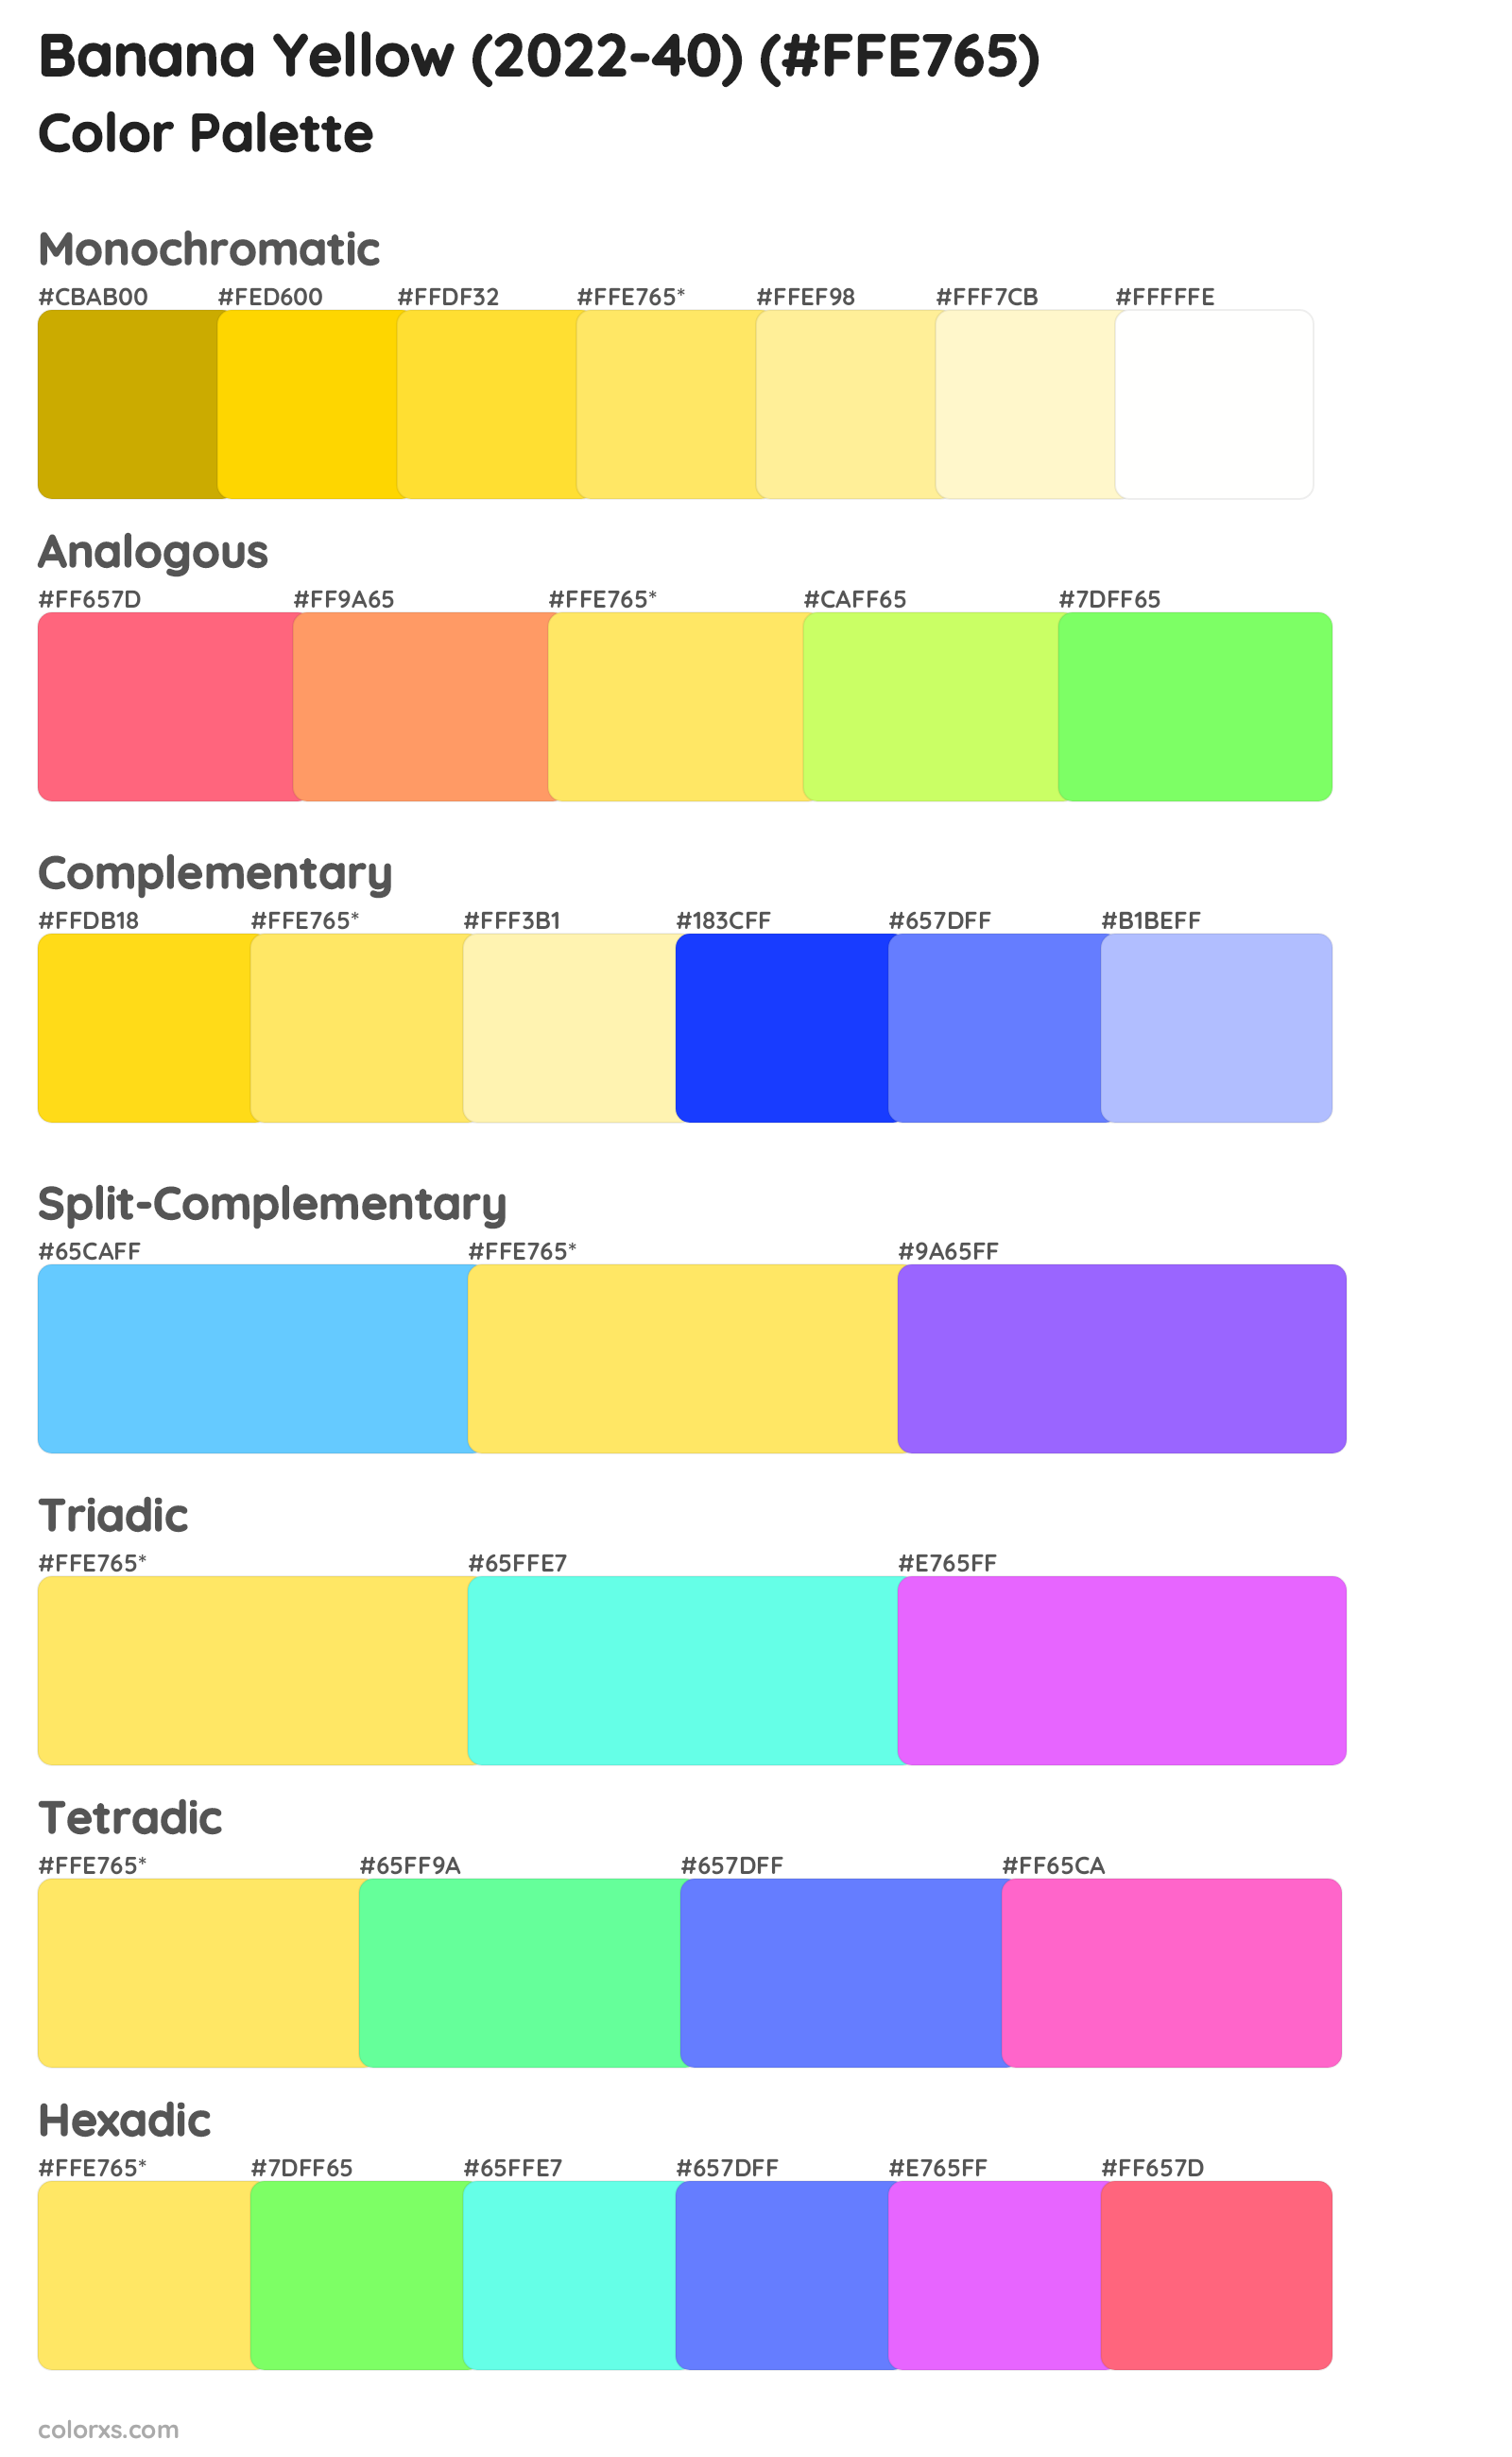 Banana Yellow (2022-40) Color Scheme Palettes